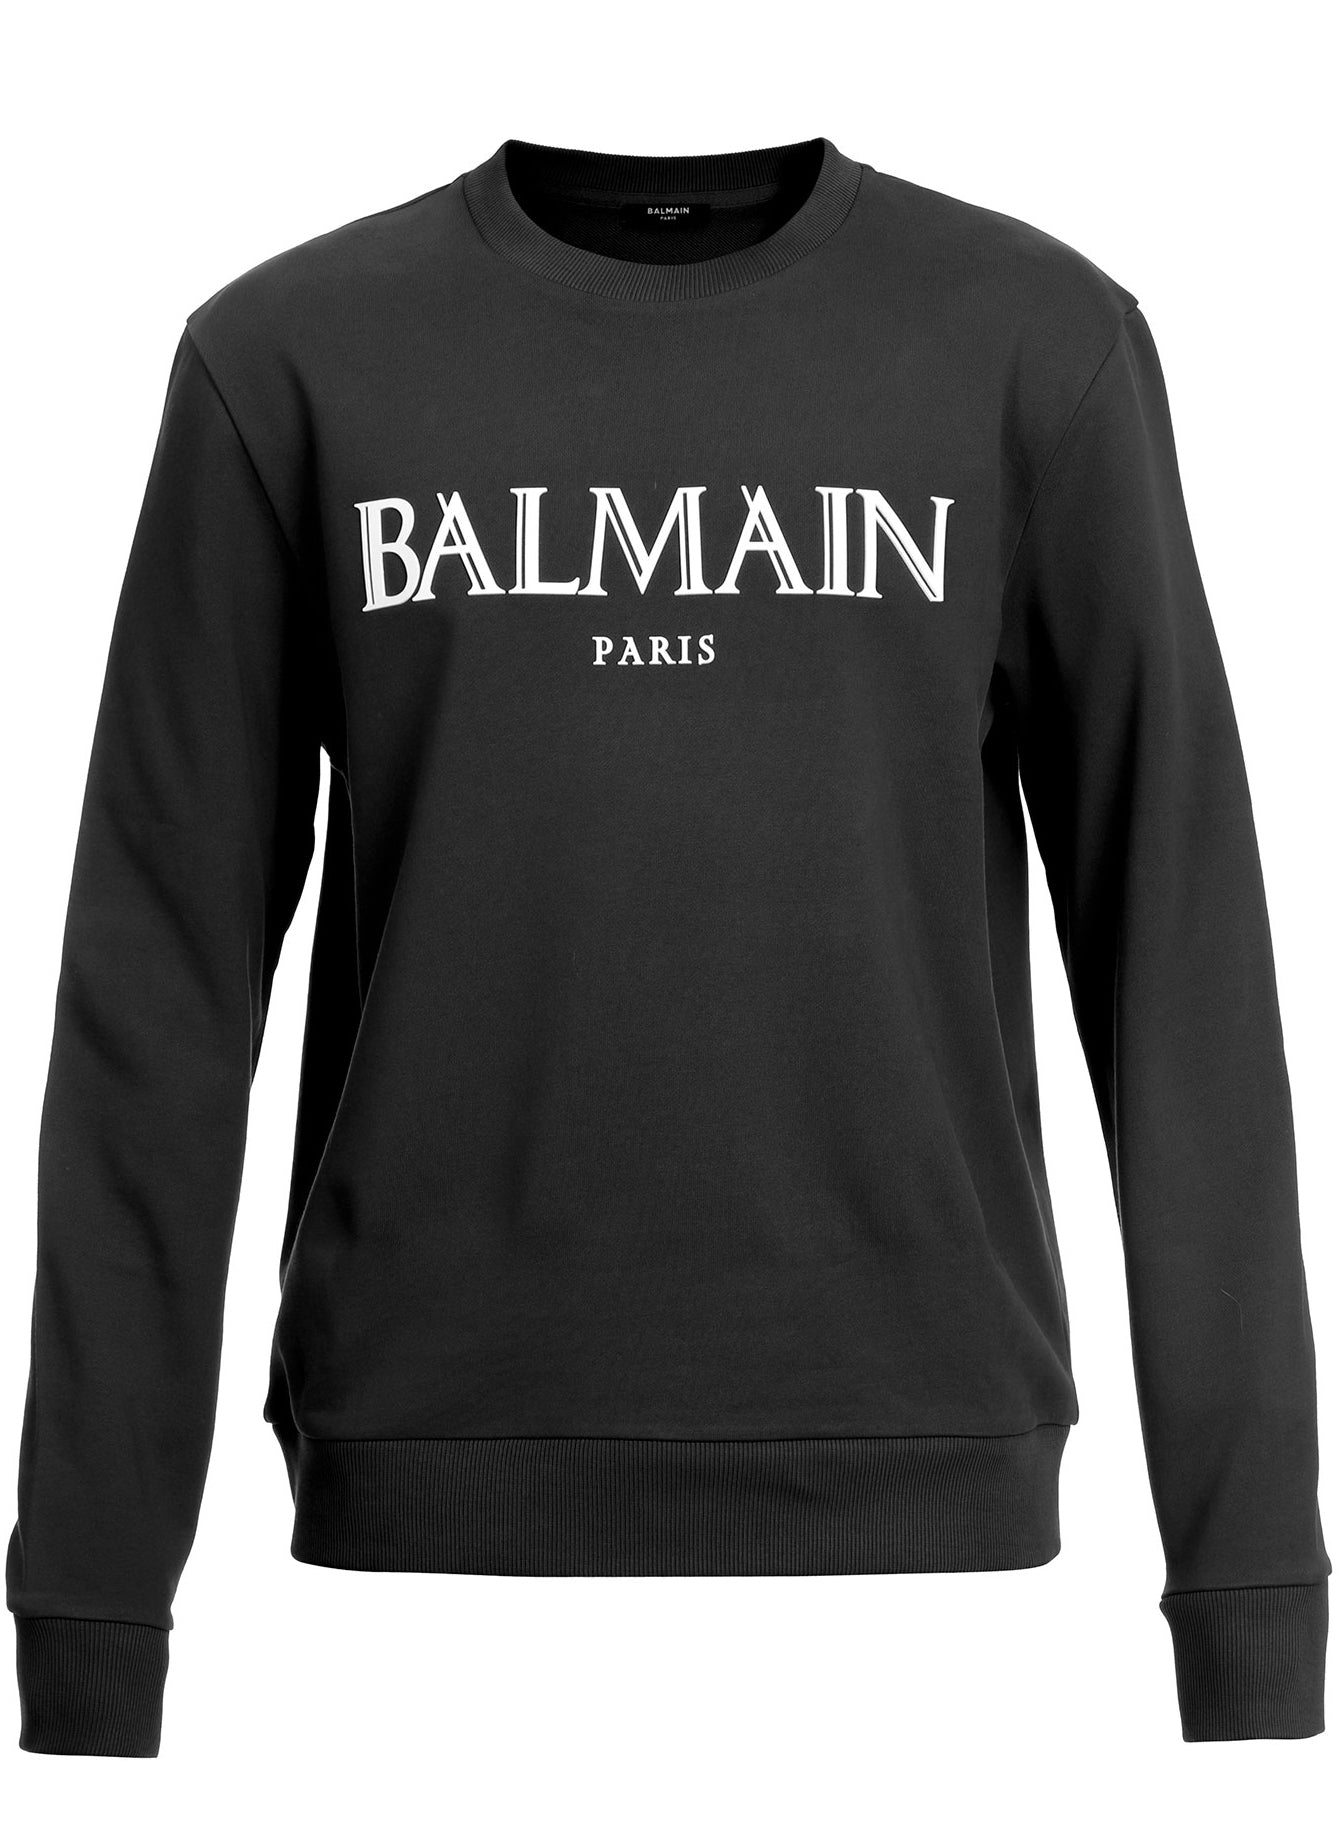 BALMAIN RUBBER SWEATSHIRT BLACK - PureAtlanta.com